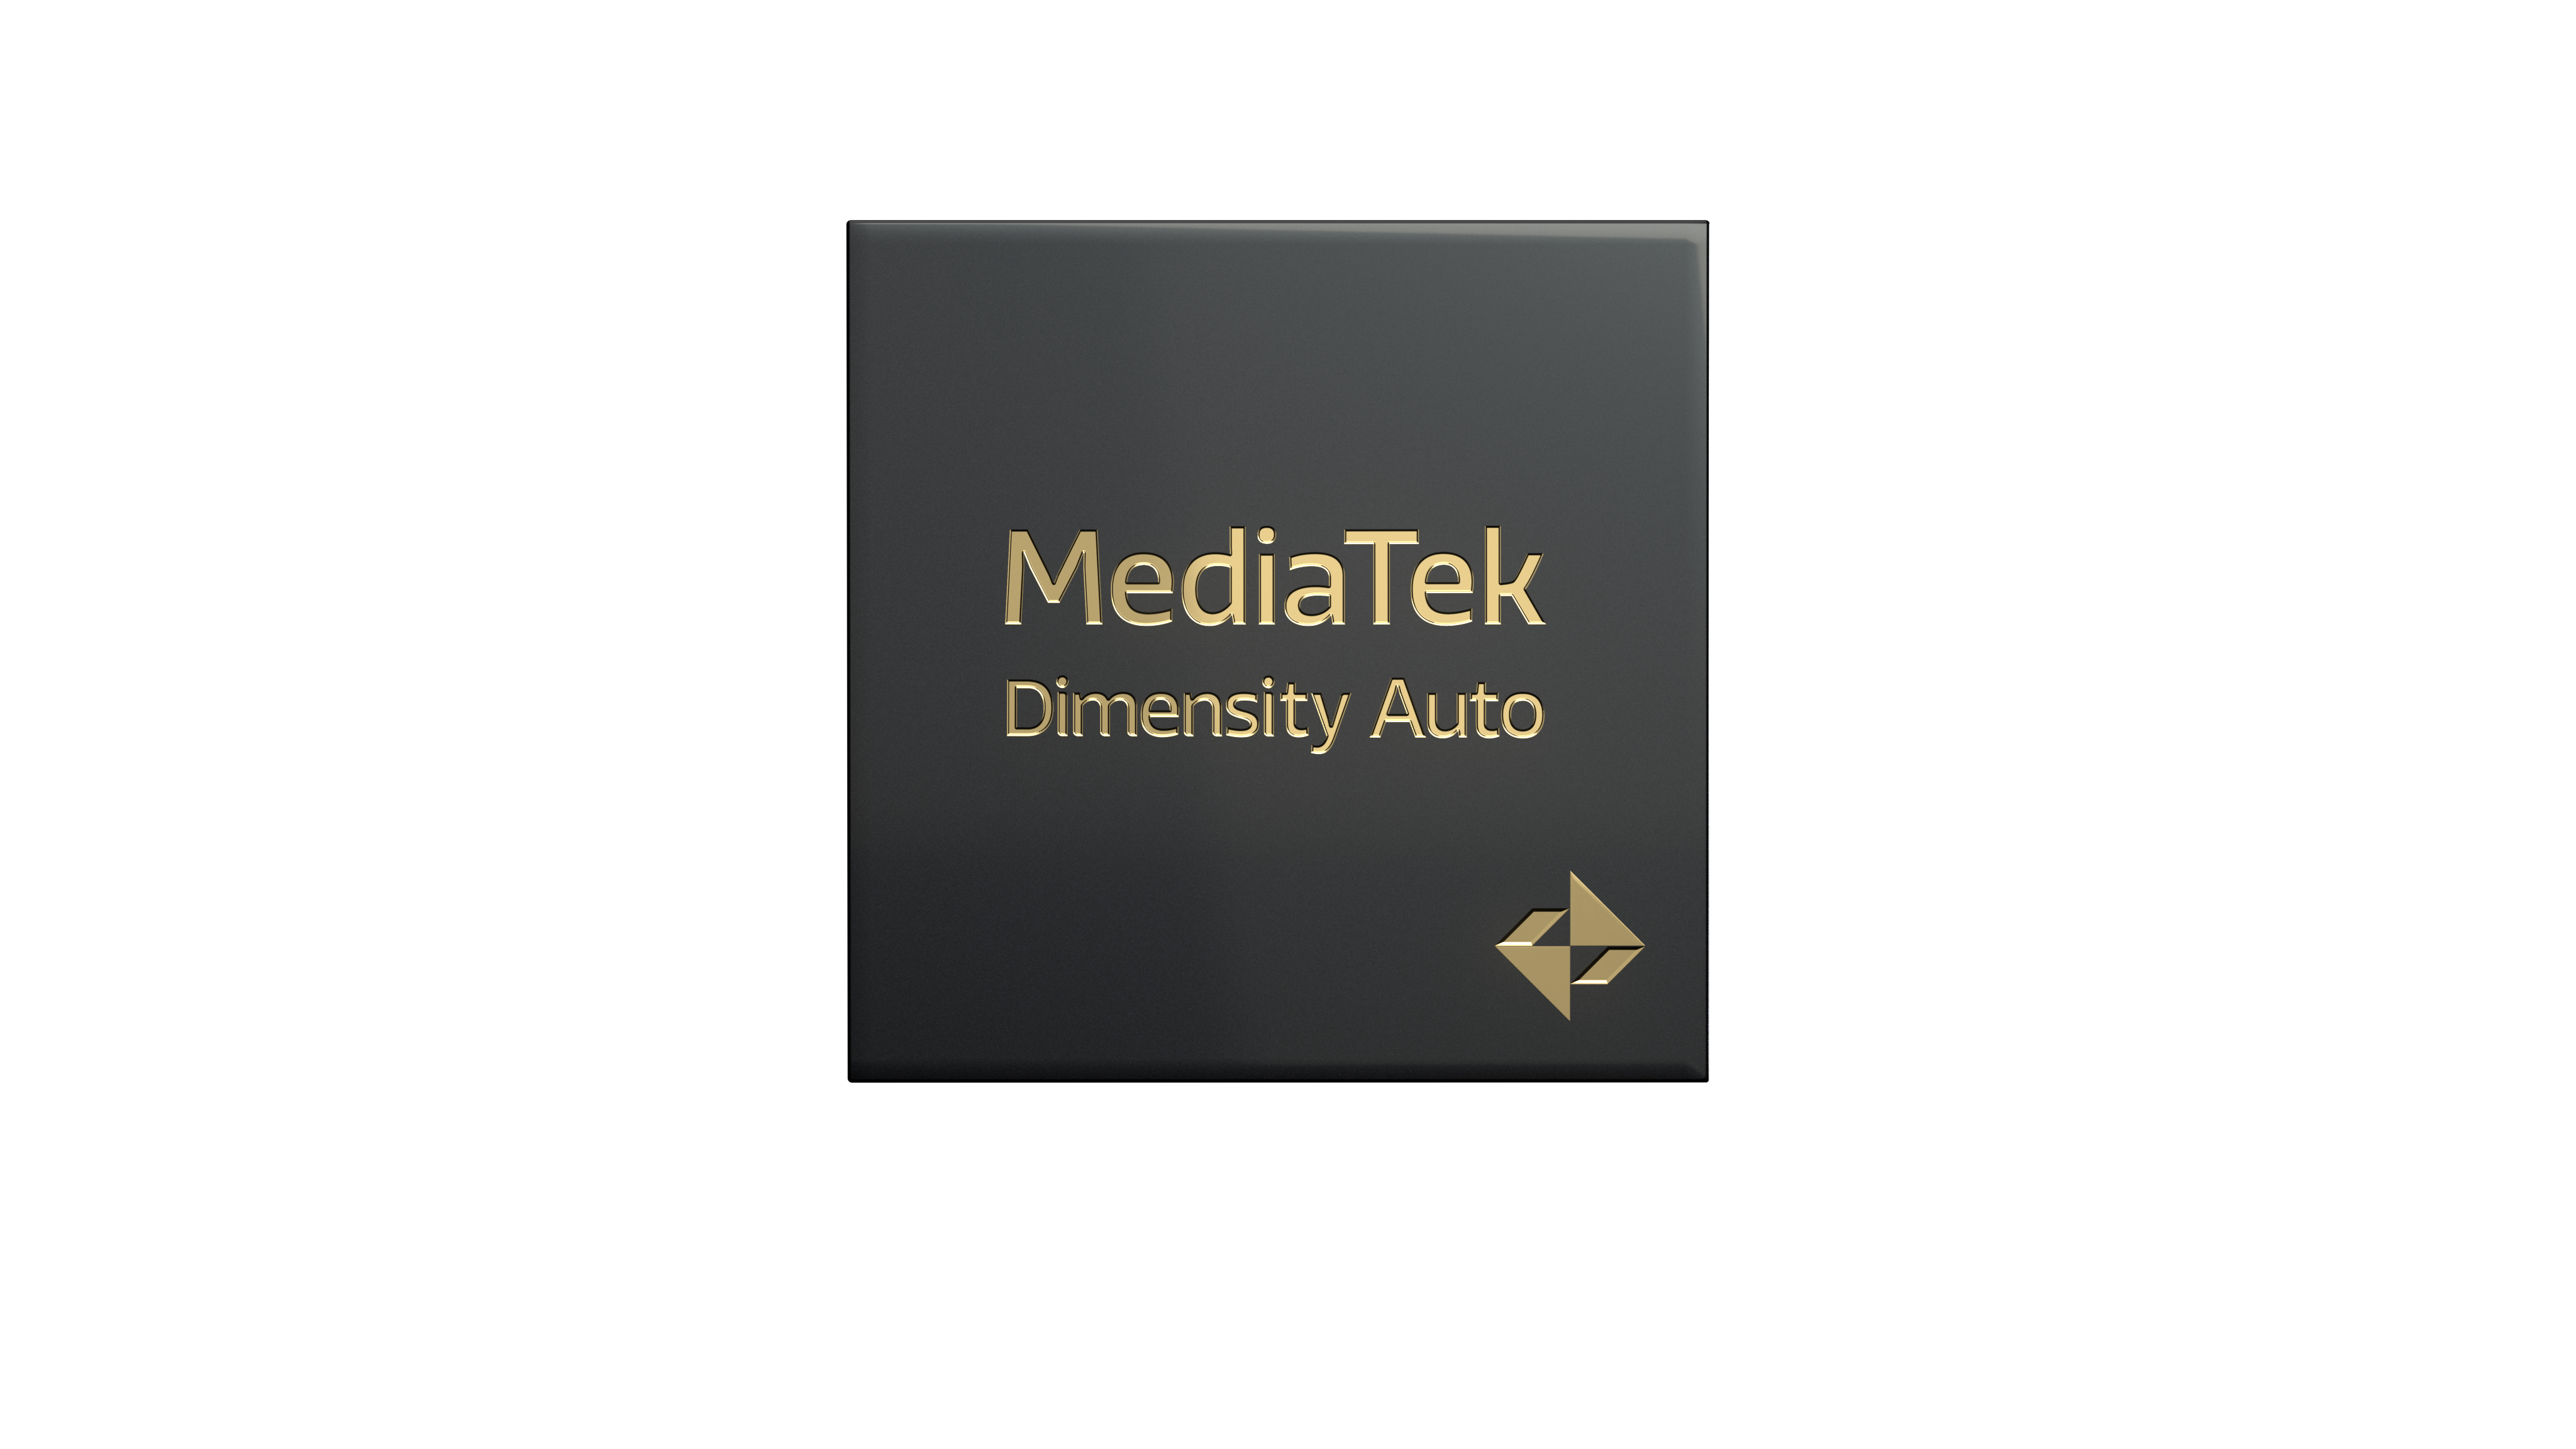 MediaTek 发布Dimensity Auto天玑汽车平台，赋能智能汽车科技创新